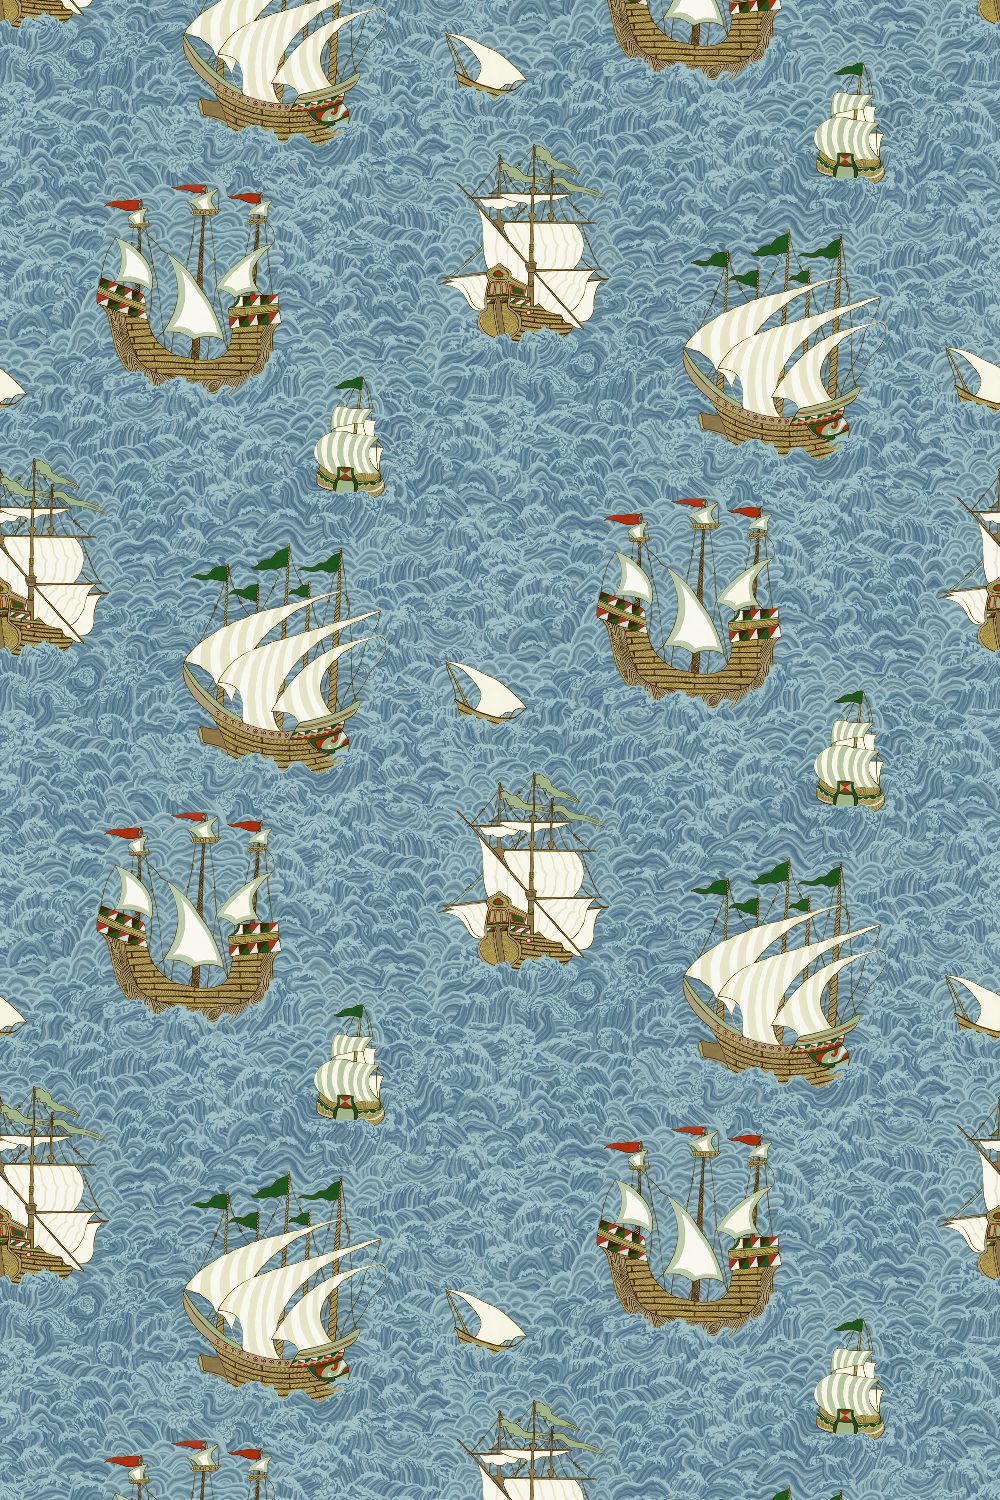 Josephine-Munsey-wallpaper-sea-blue-JMW1033.11.0-hand-illustrated-viking-ships-waves-sea-vintage-children's-wallpaper